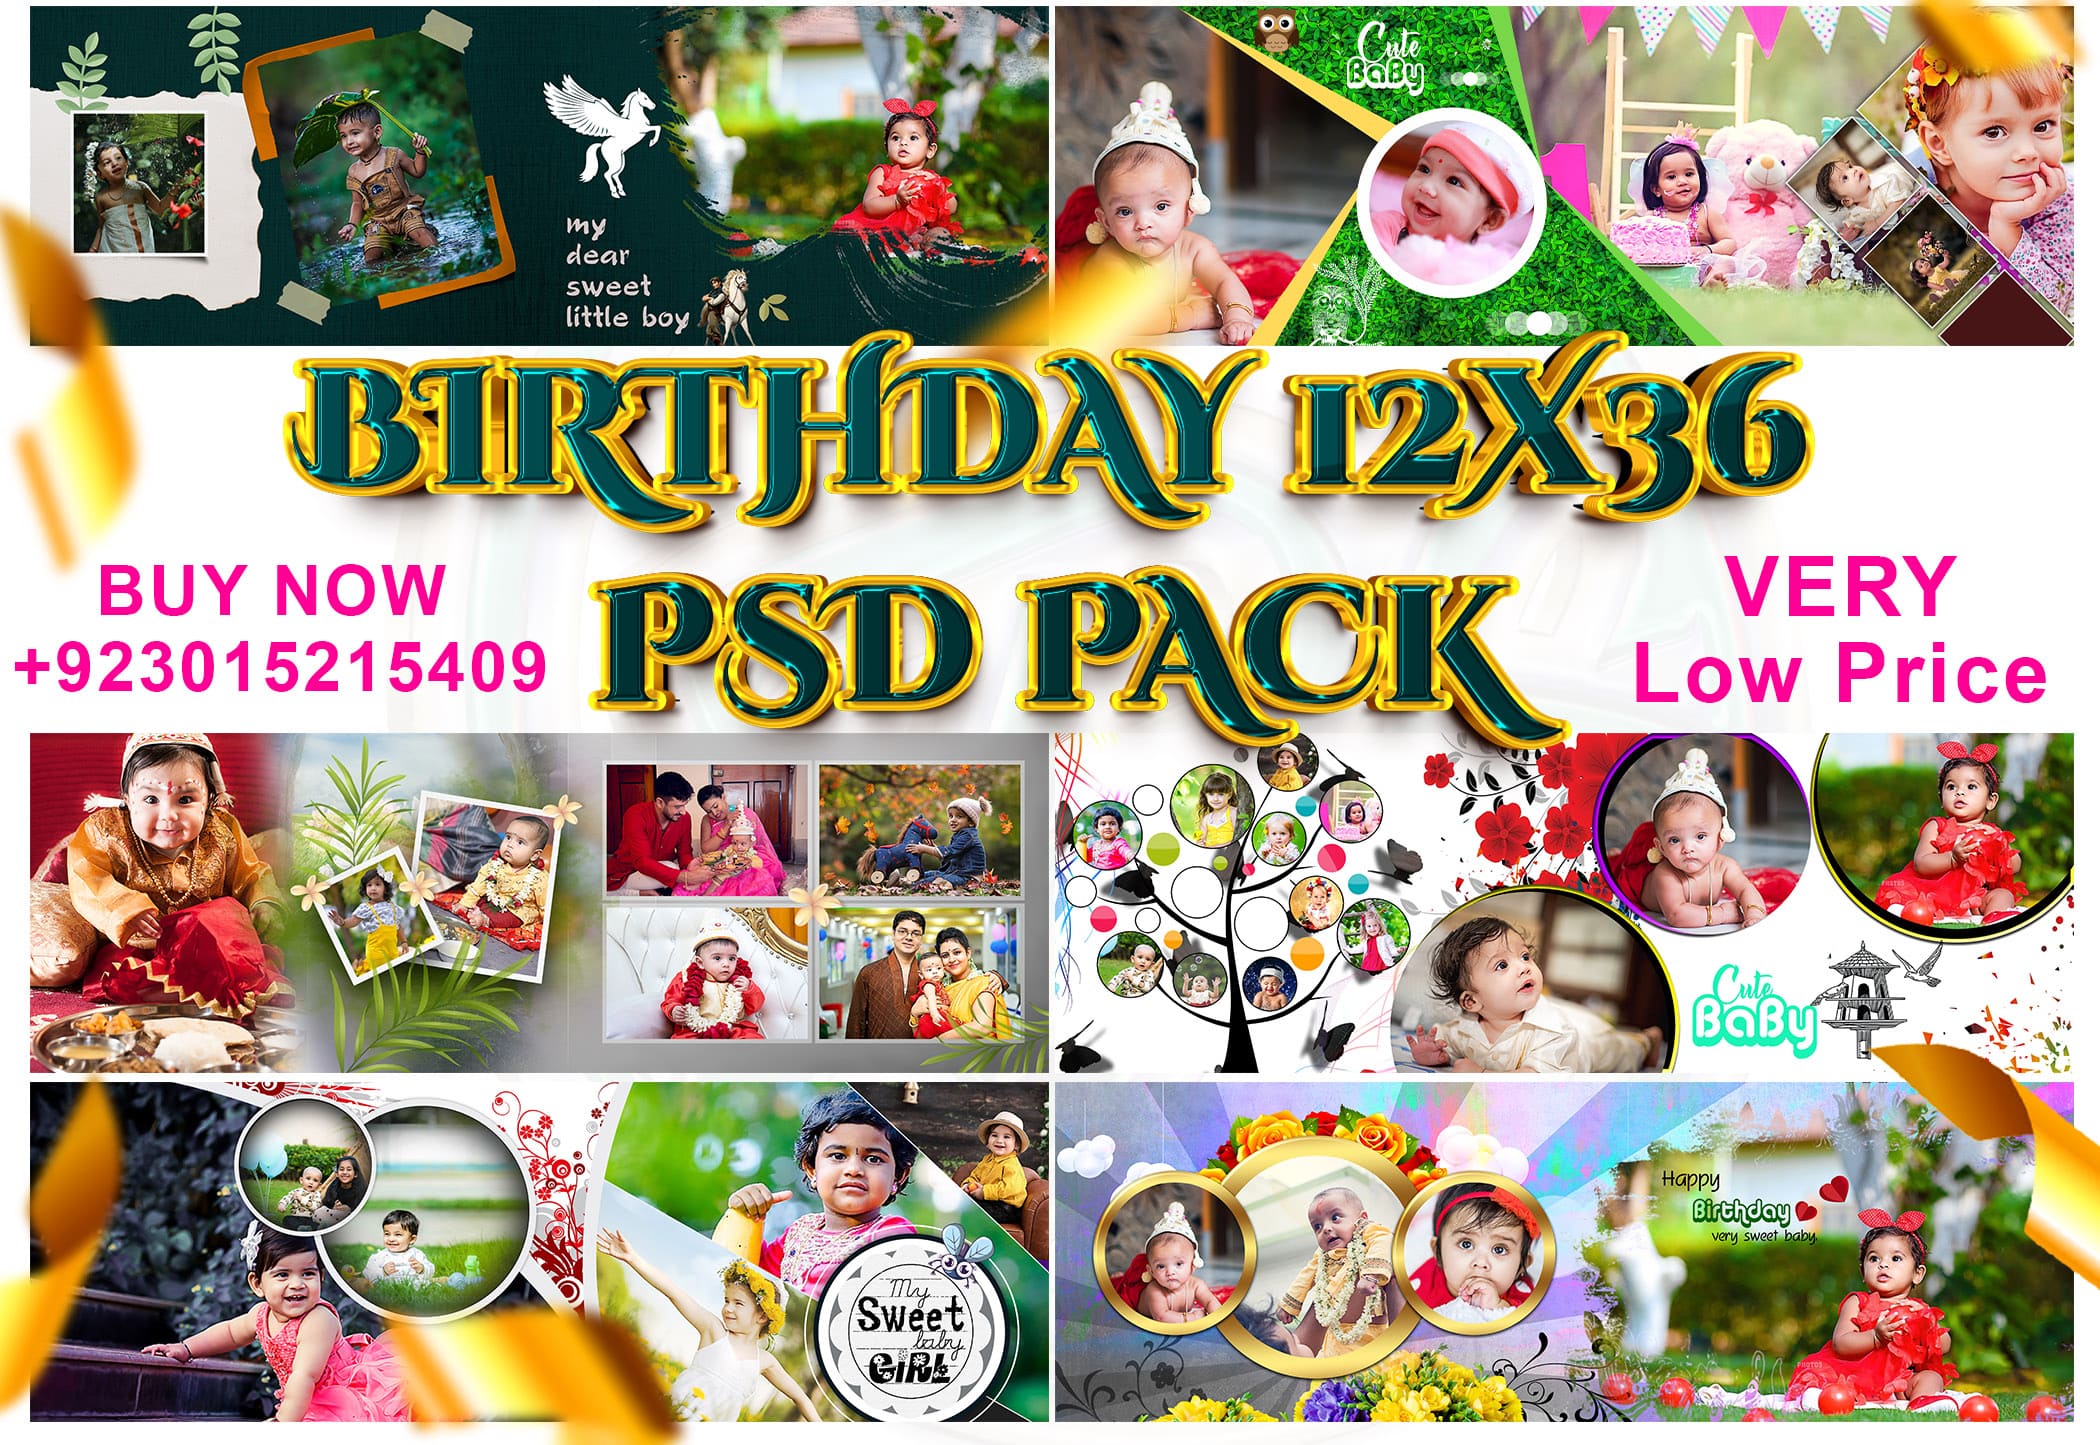 2023 NEW BIRTHDAY 12X36 PSD Pack